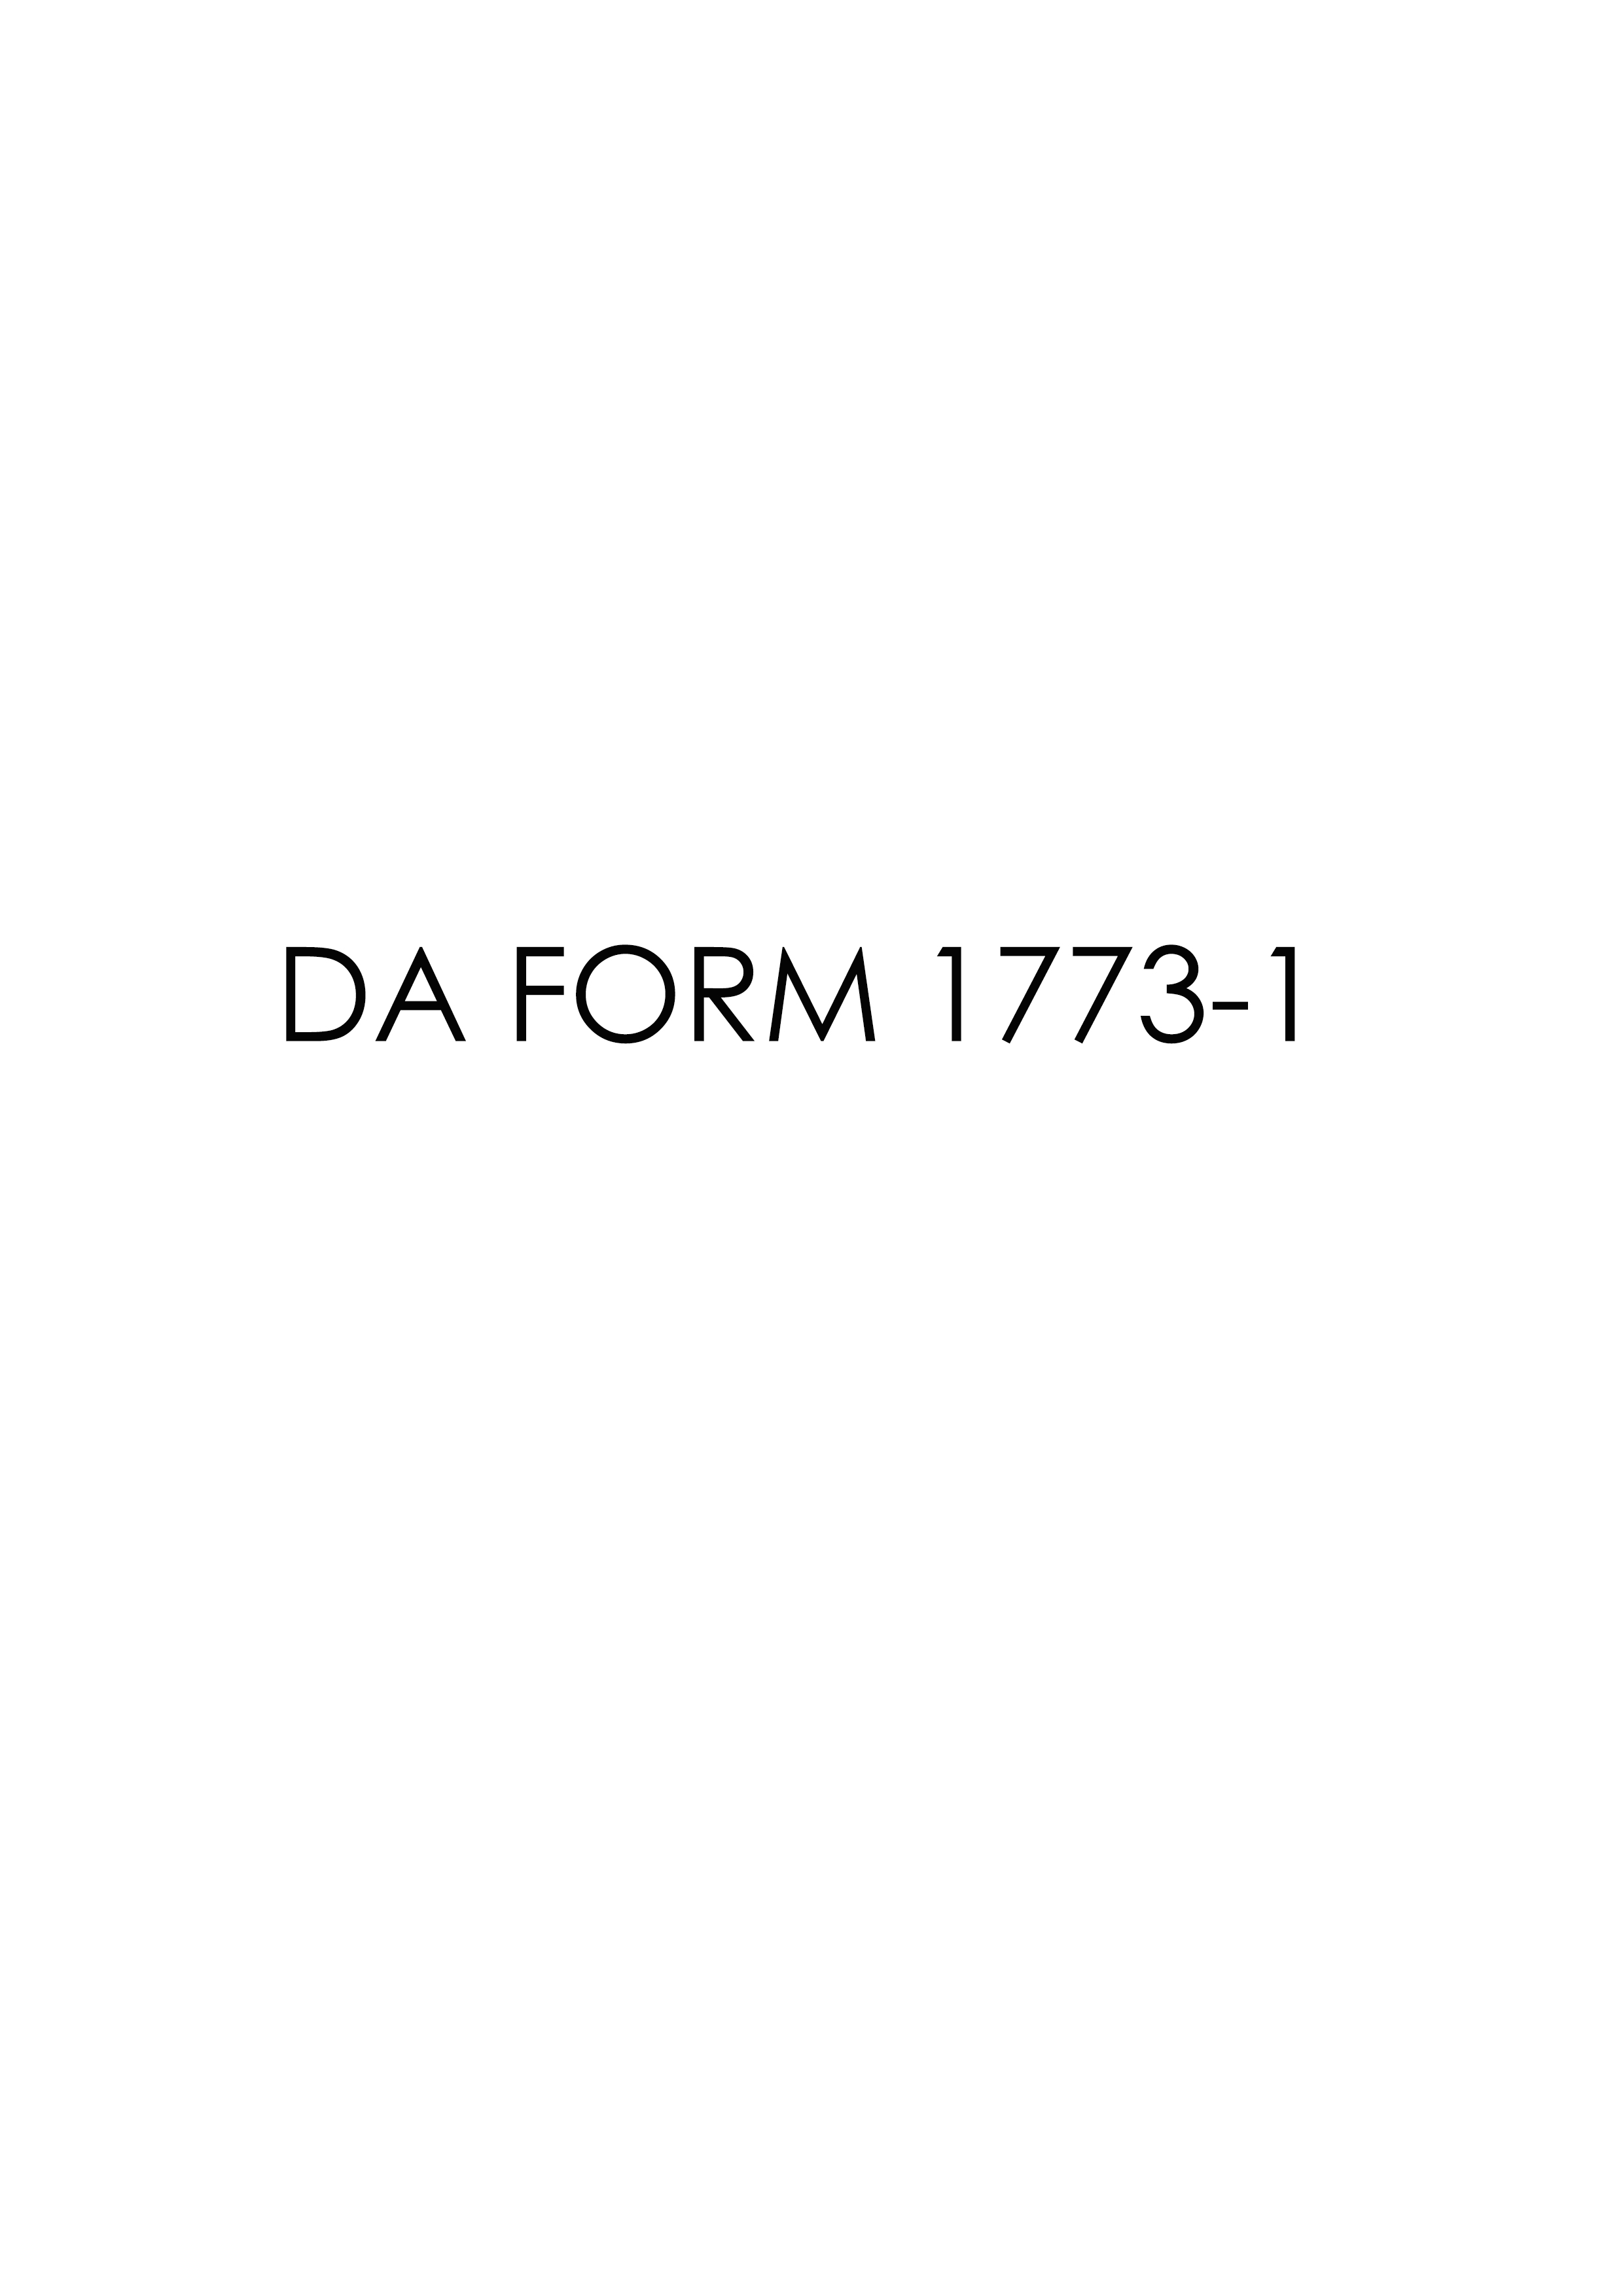 Download da 1773-1 Form